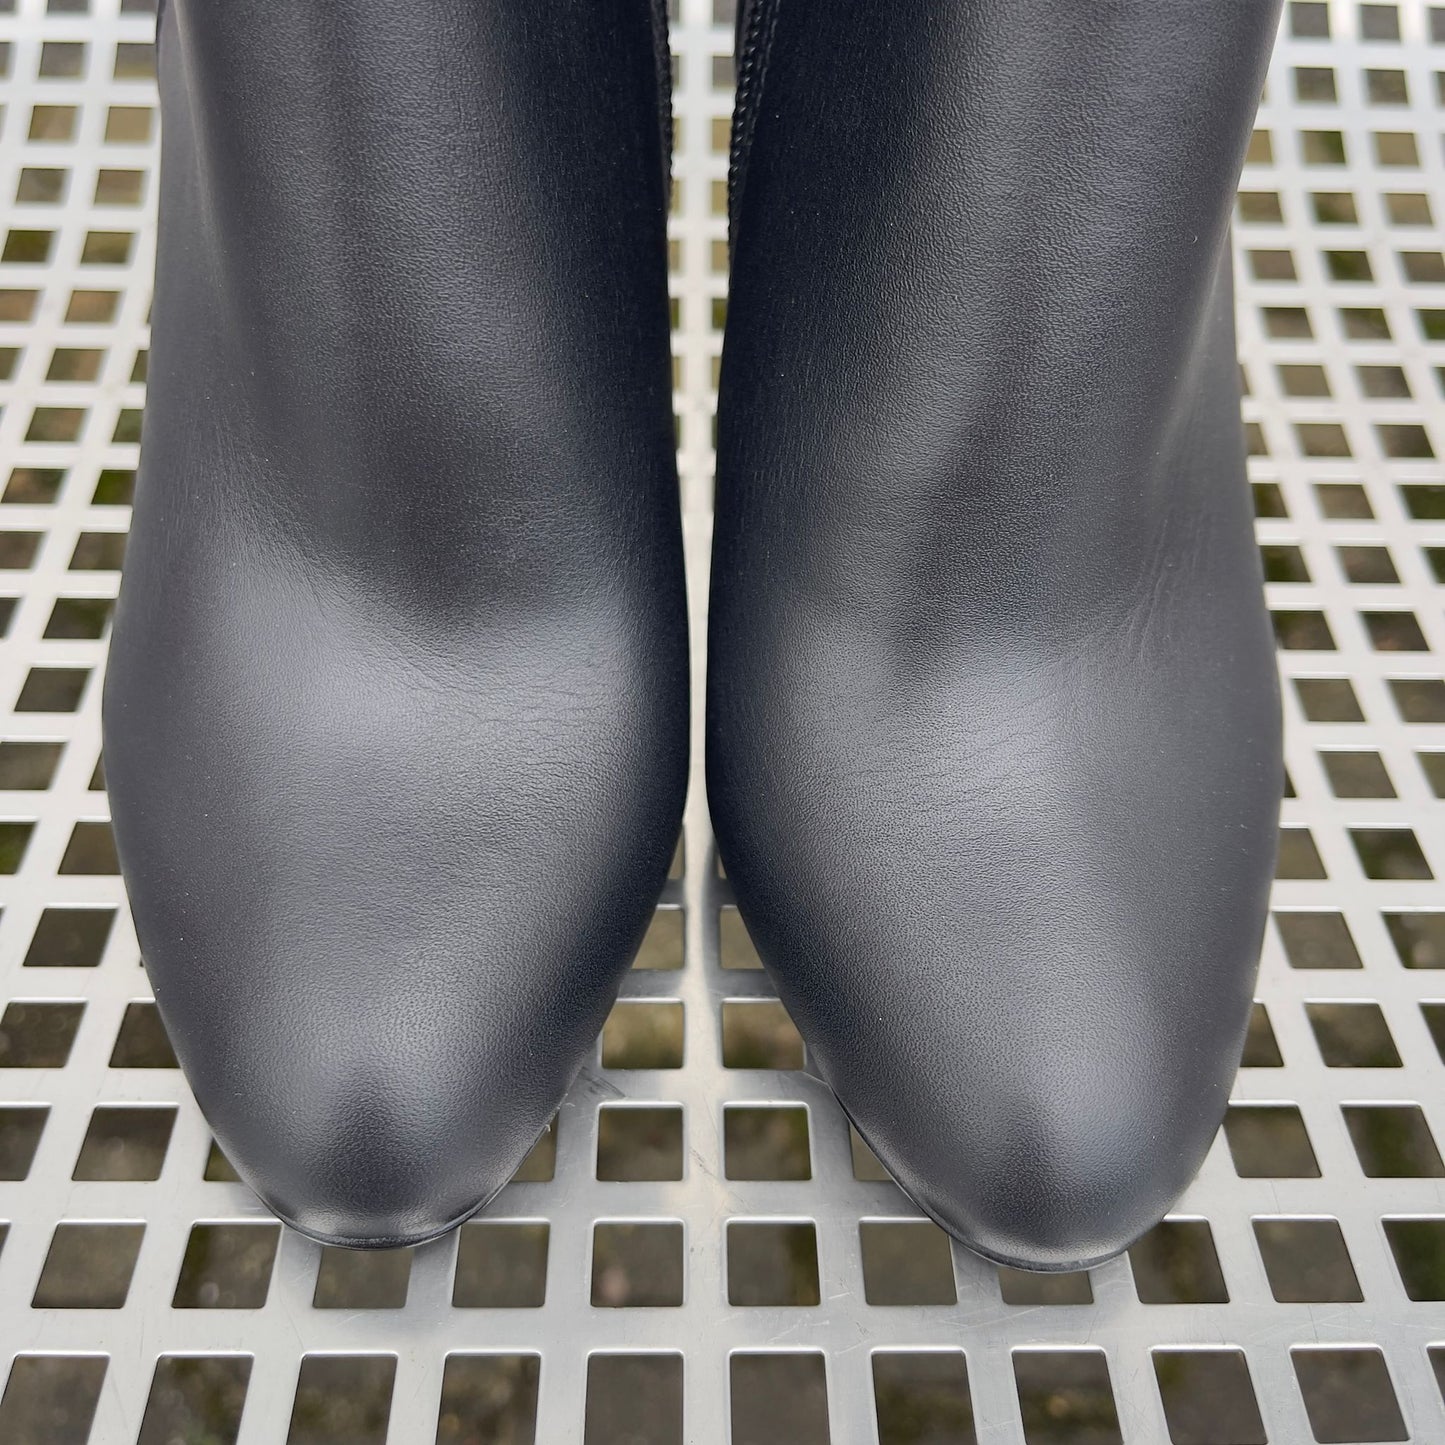 Almond toe black boots